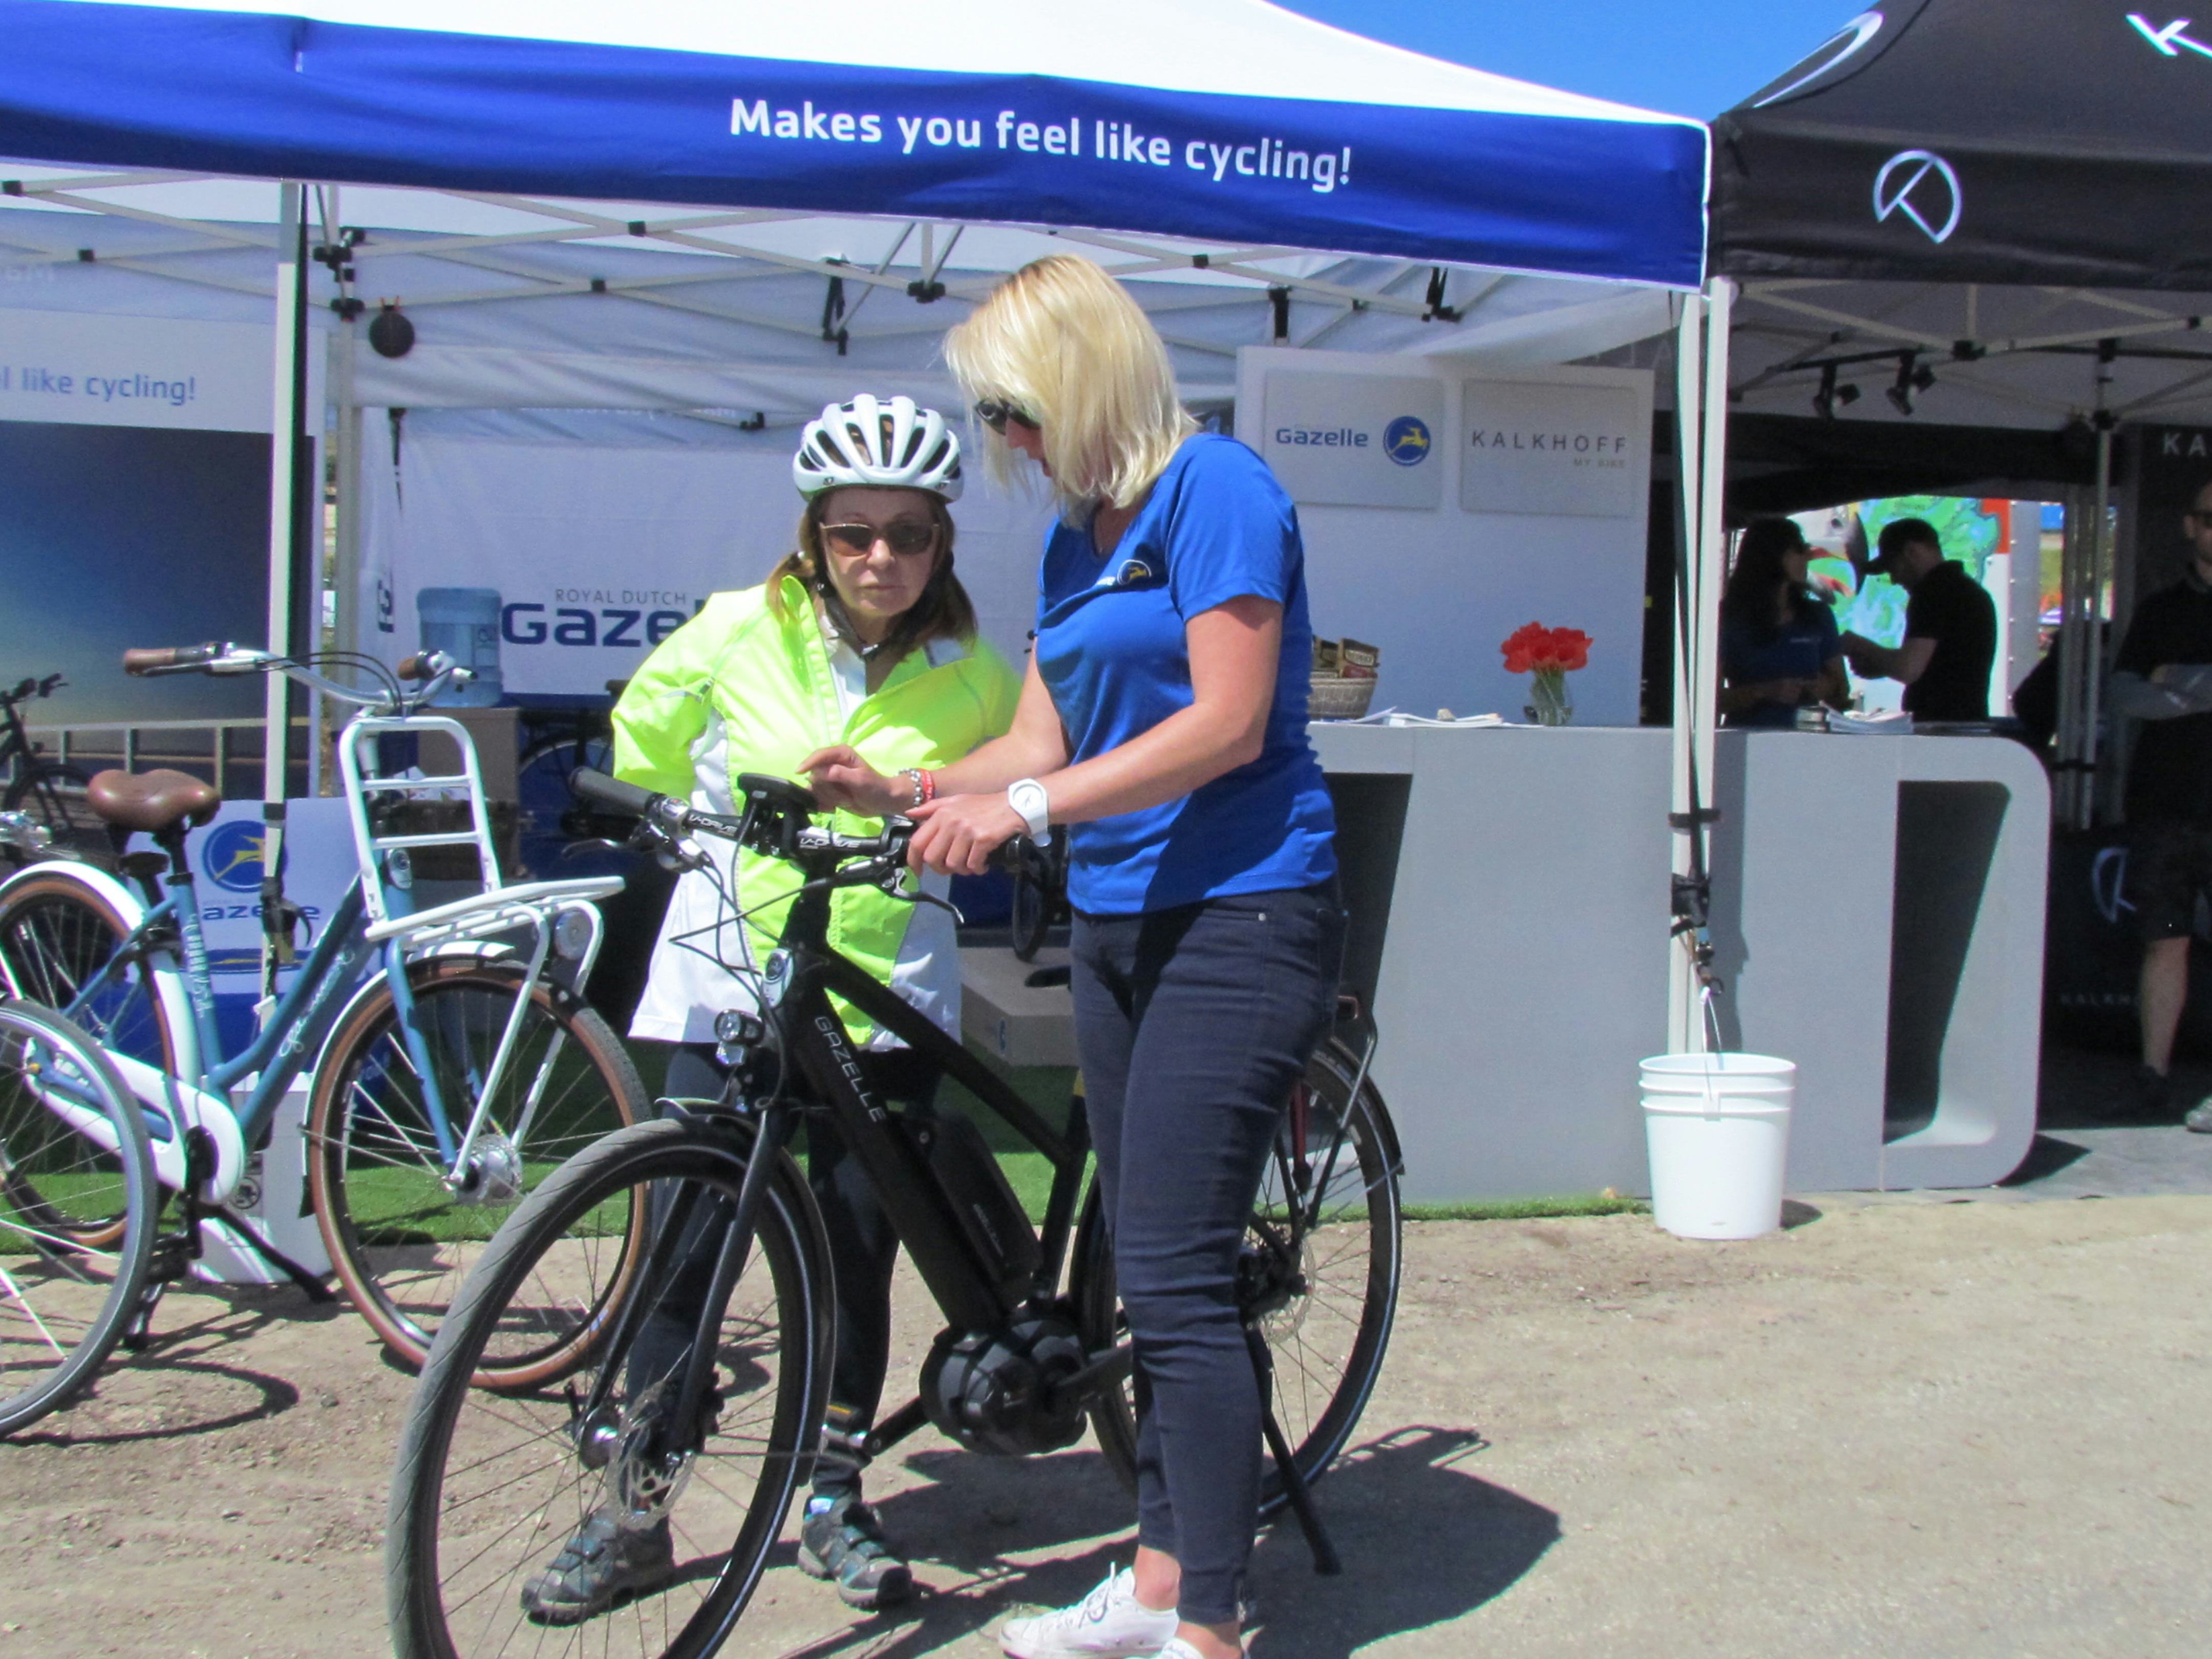 Pon Bike旗下自行車品牌之一的Gazelle在美國西雅圖展展出其城市風格的電動自行車。並可提供試騎服務。-Photo Bike Europe